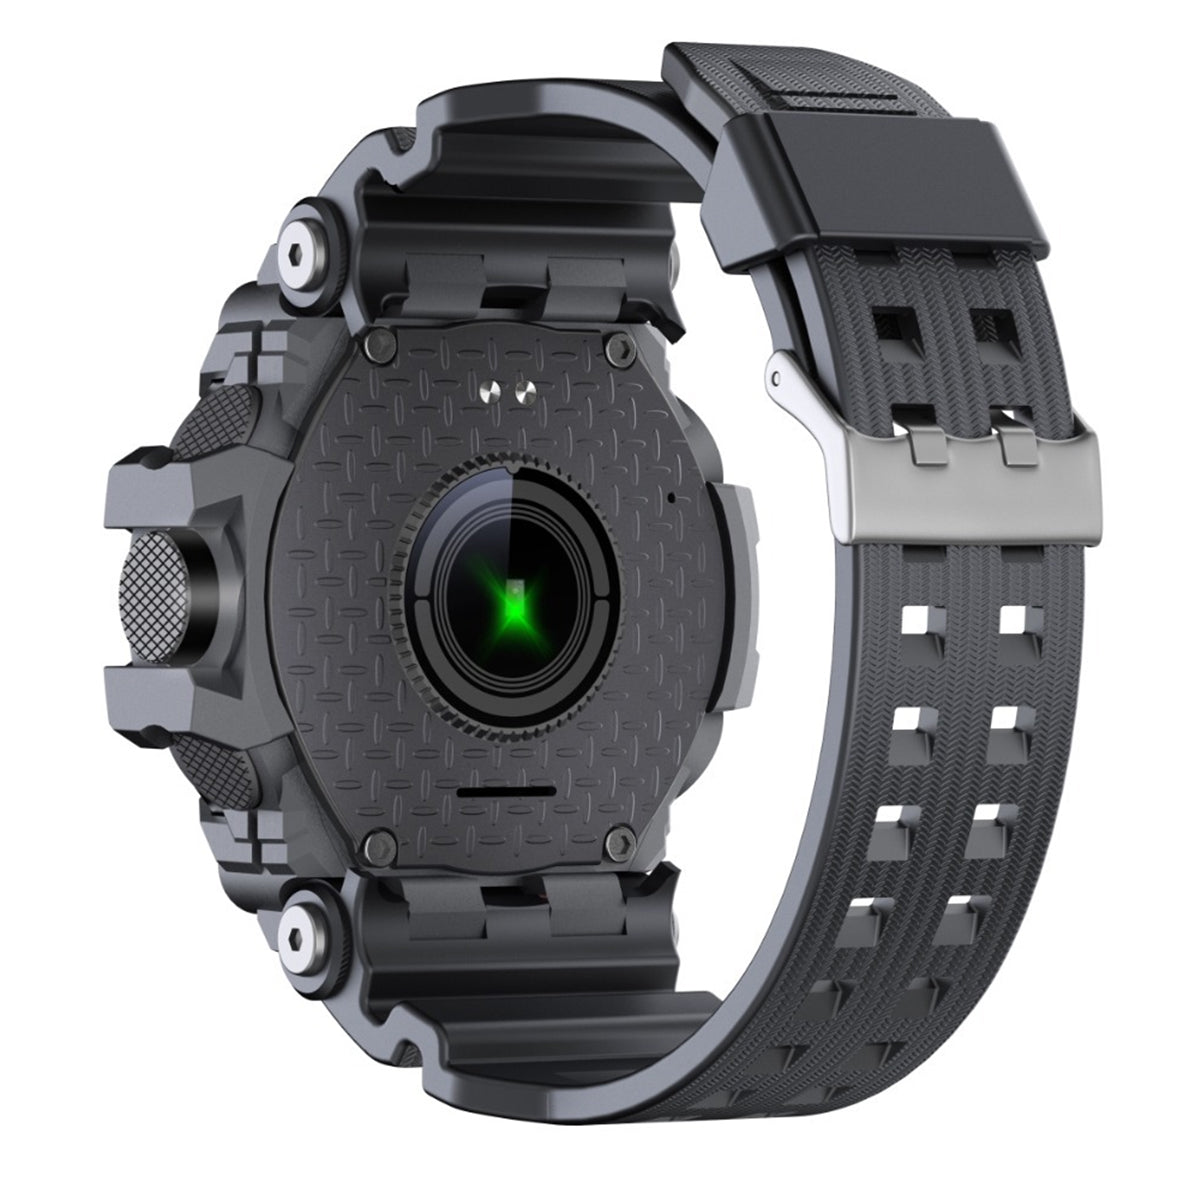 Fralugio Smart Watch Reloj Inteligente Deportivo Ct8 Full Hd